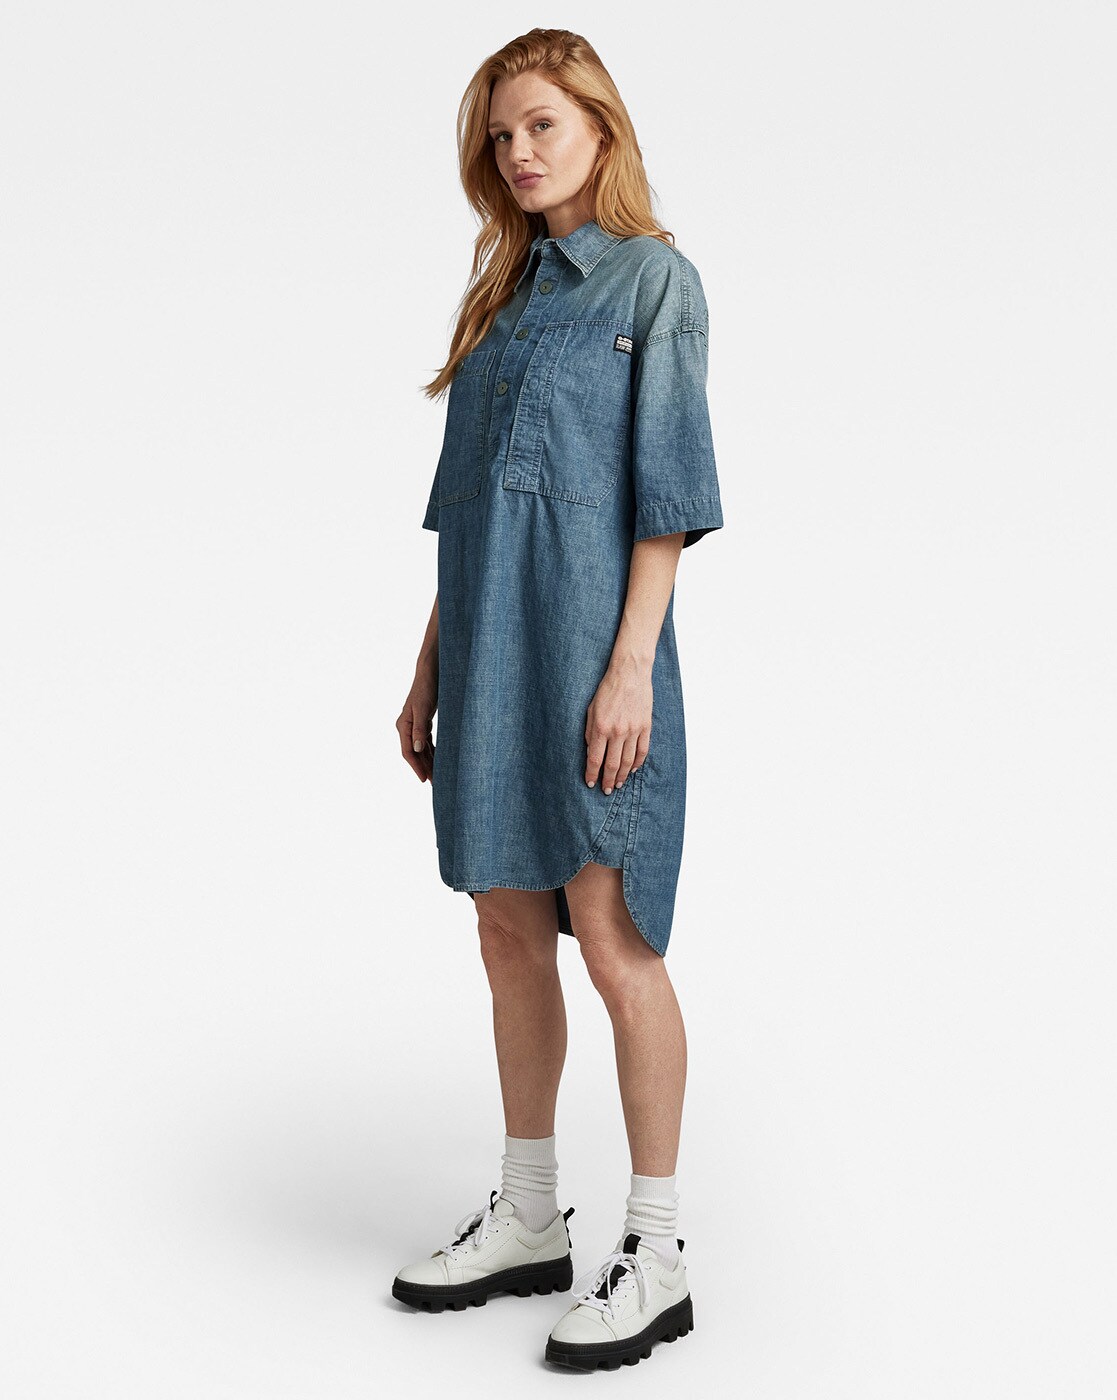 Buy Amazon Brand - INKAST Women's Denim Shirt Dress Knee-Length  (INK-SS23WDR-403_Light Blue_XS) at Amazon.in